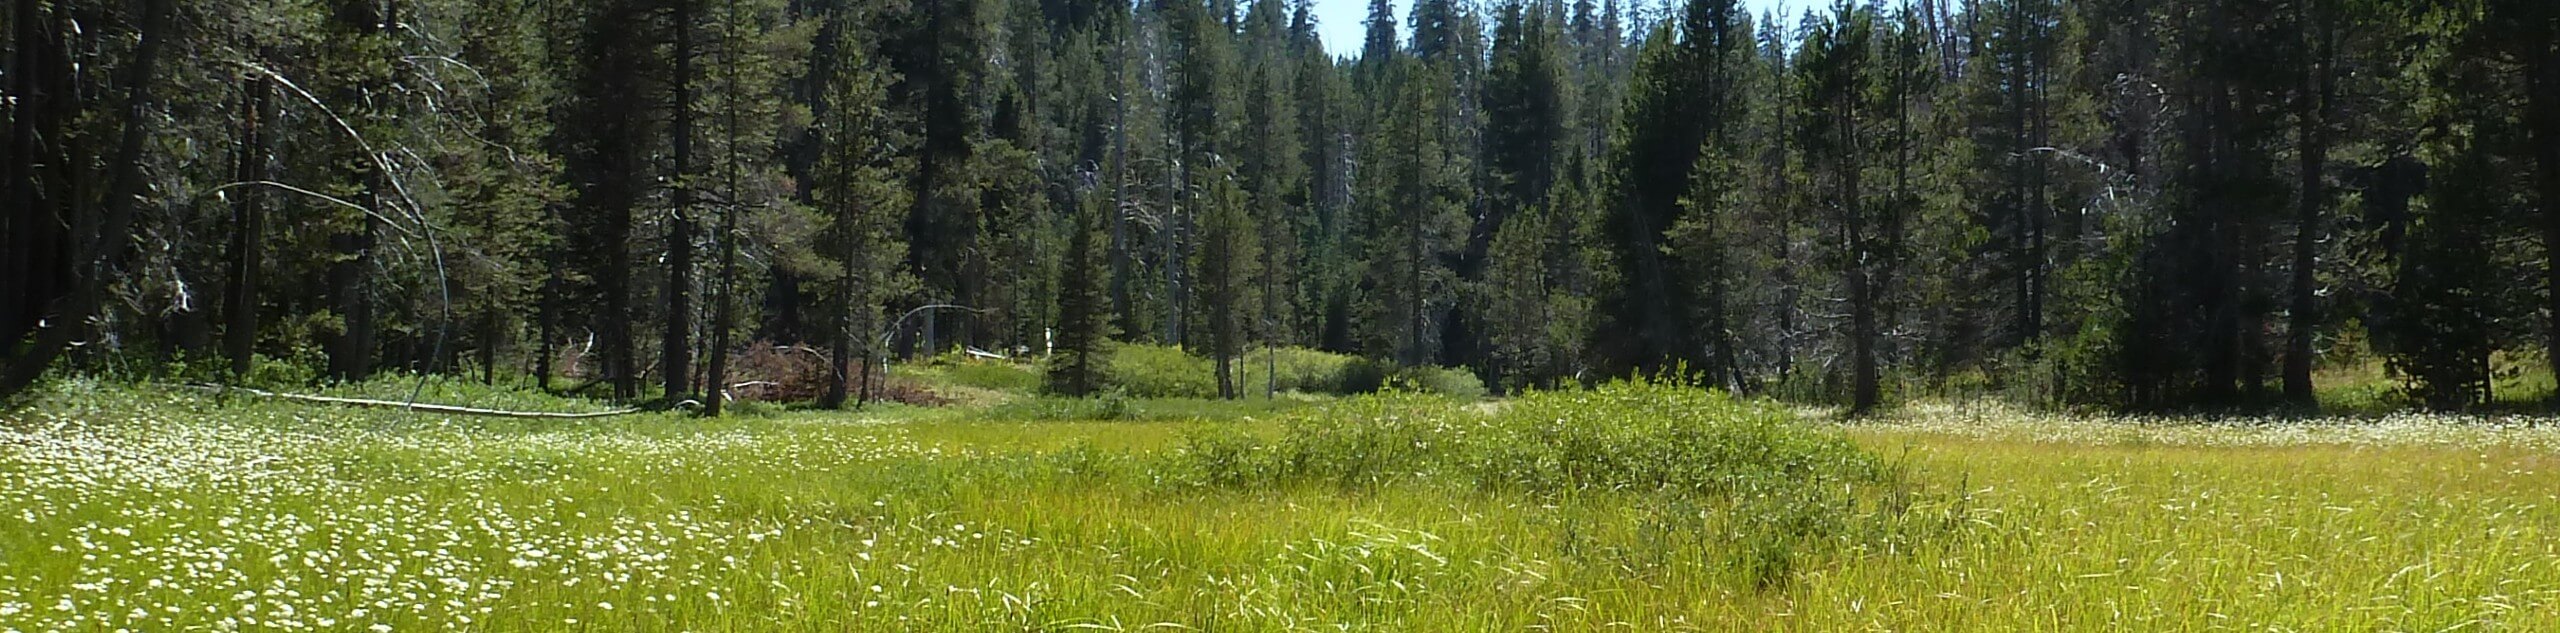 McGurk Meadow Trail